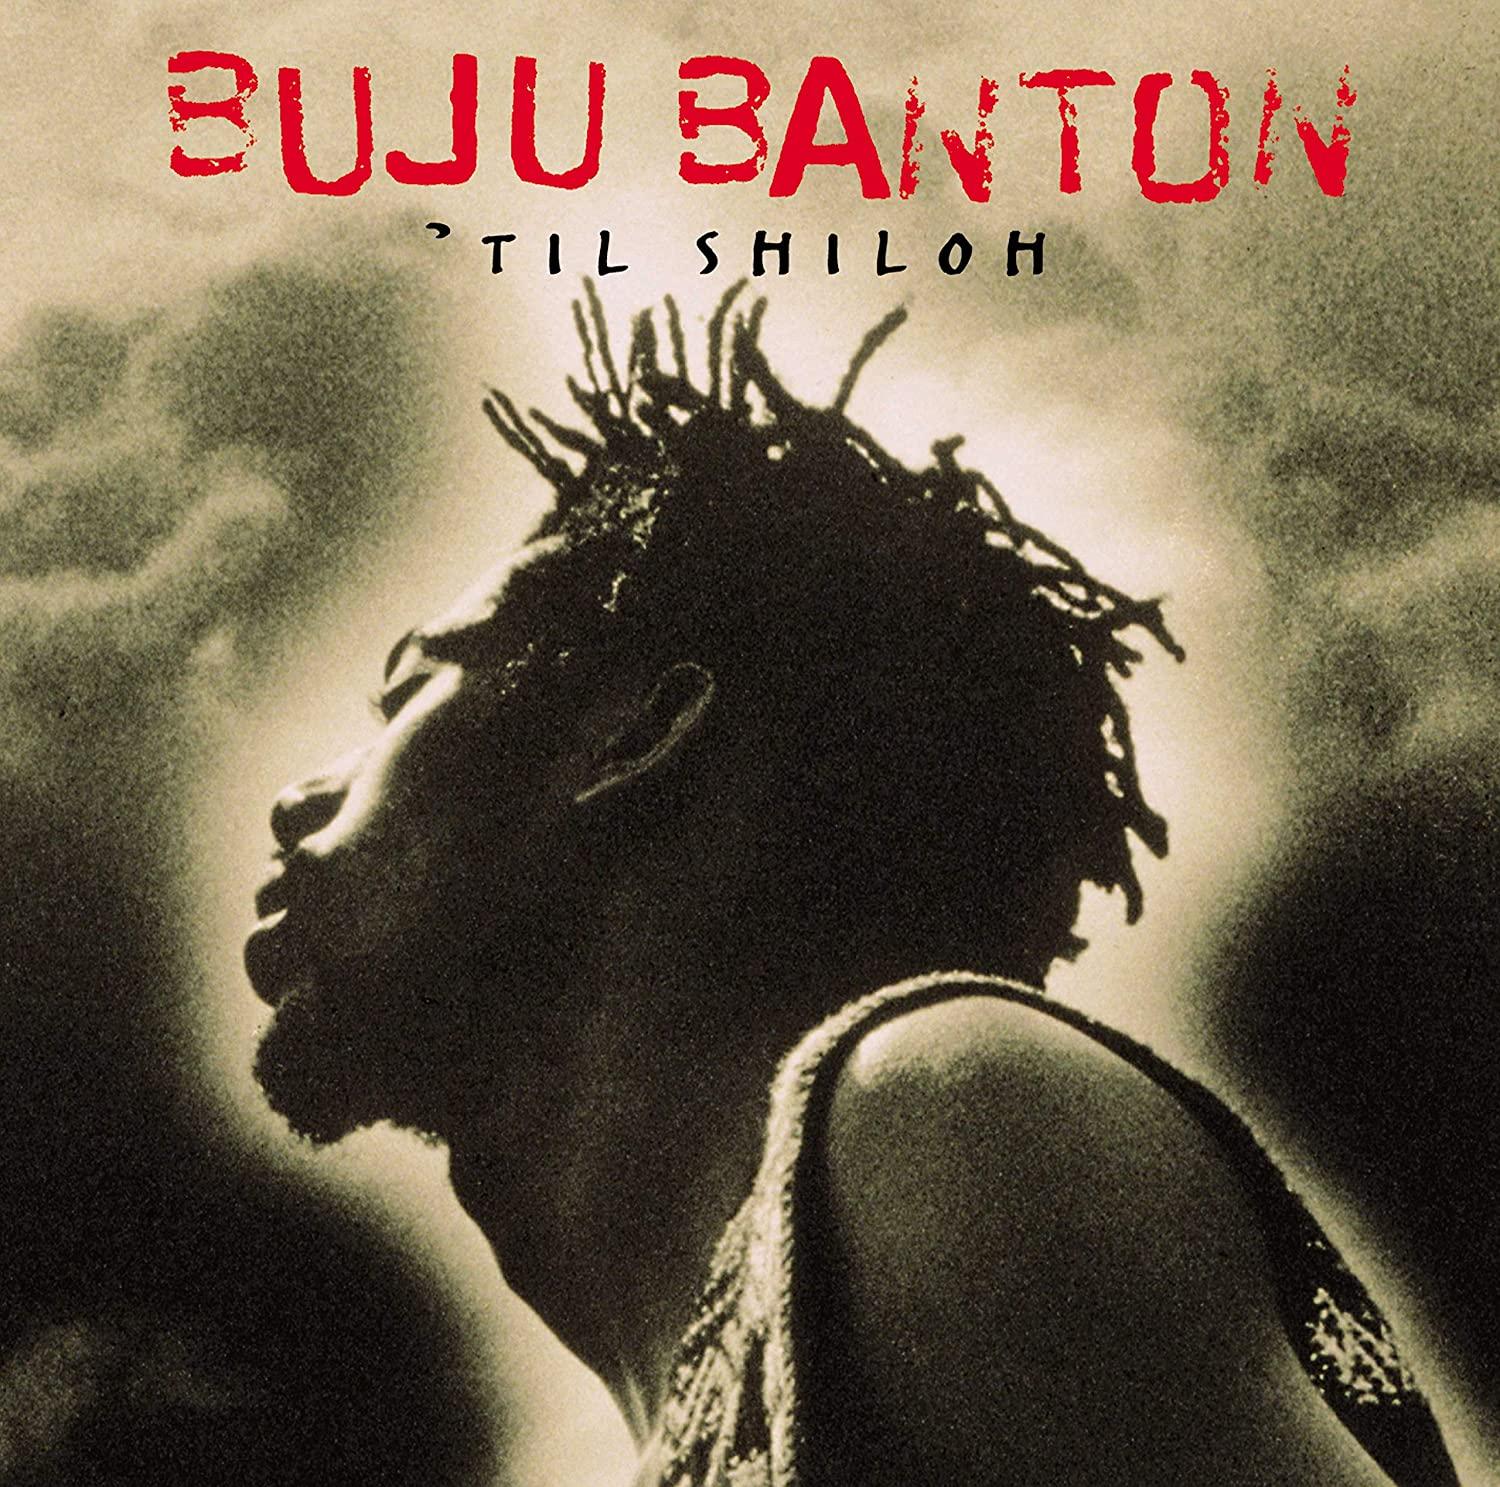 Selected image for BUJU BANTON - Til Shiloh 25th Anniversary (2LP)